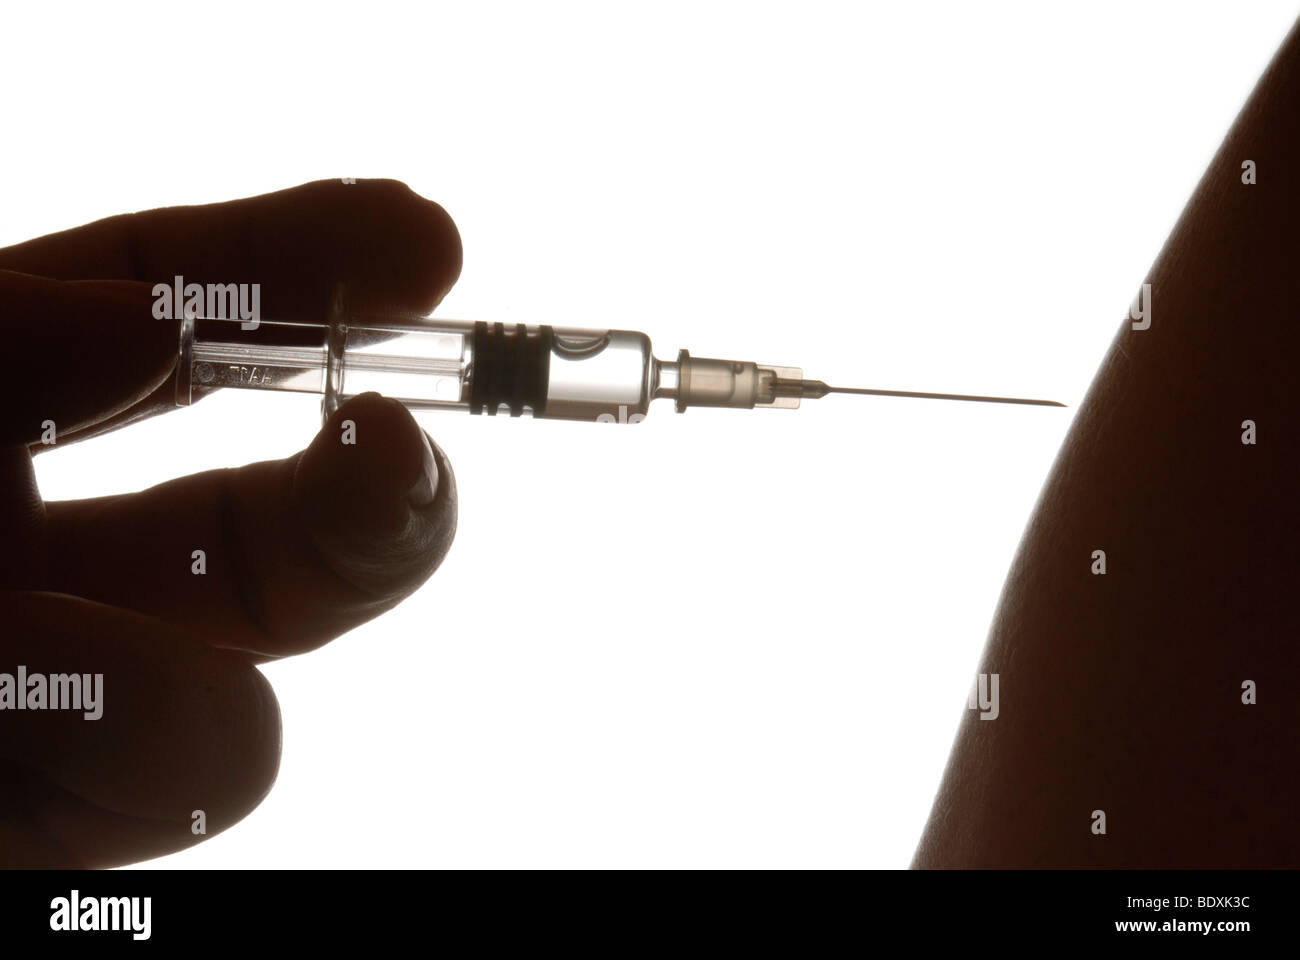 Hand with syringe, symbolic image for flu vaccination Stock Photo